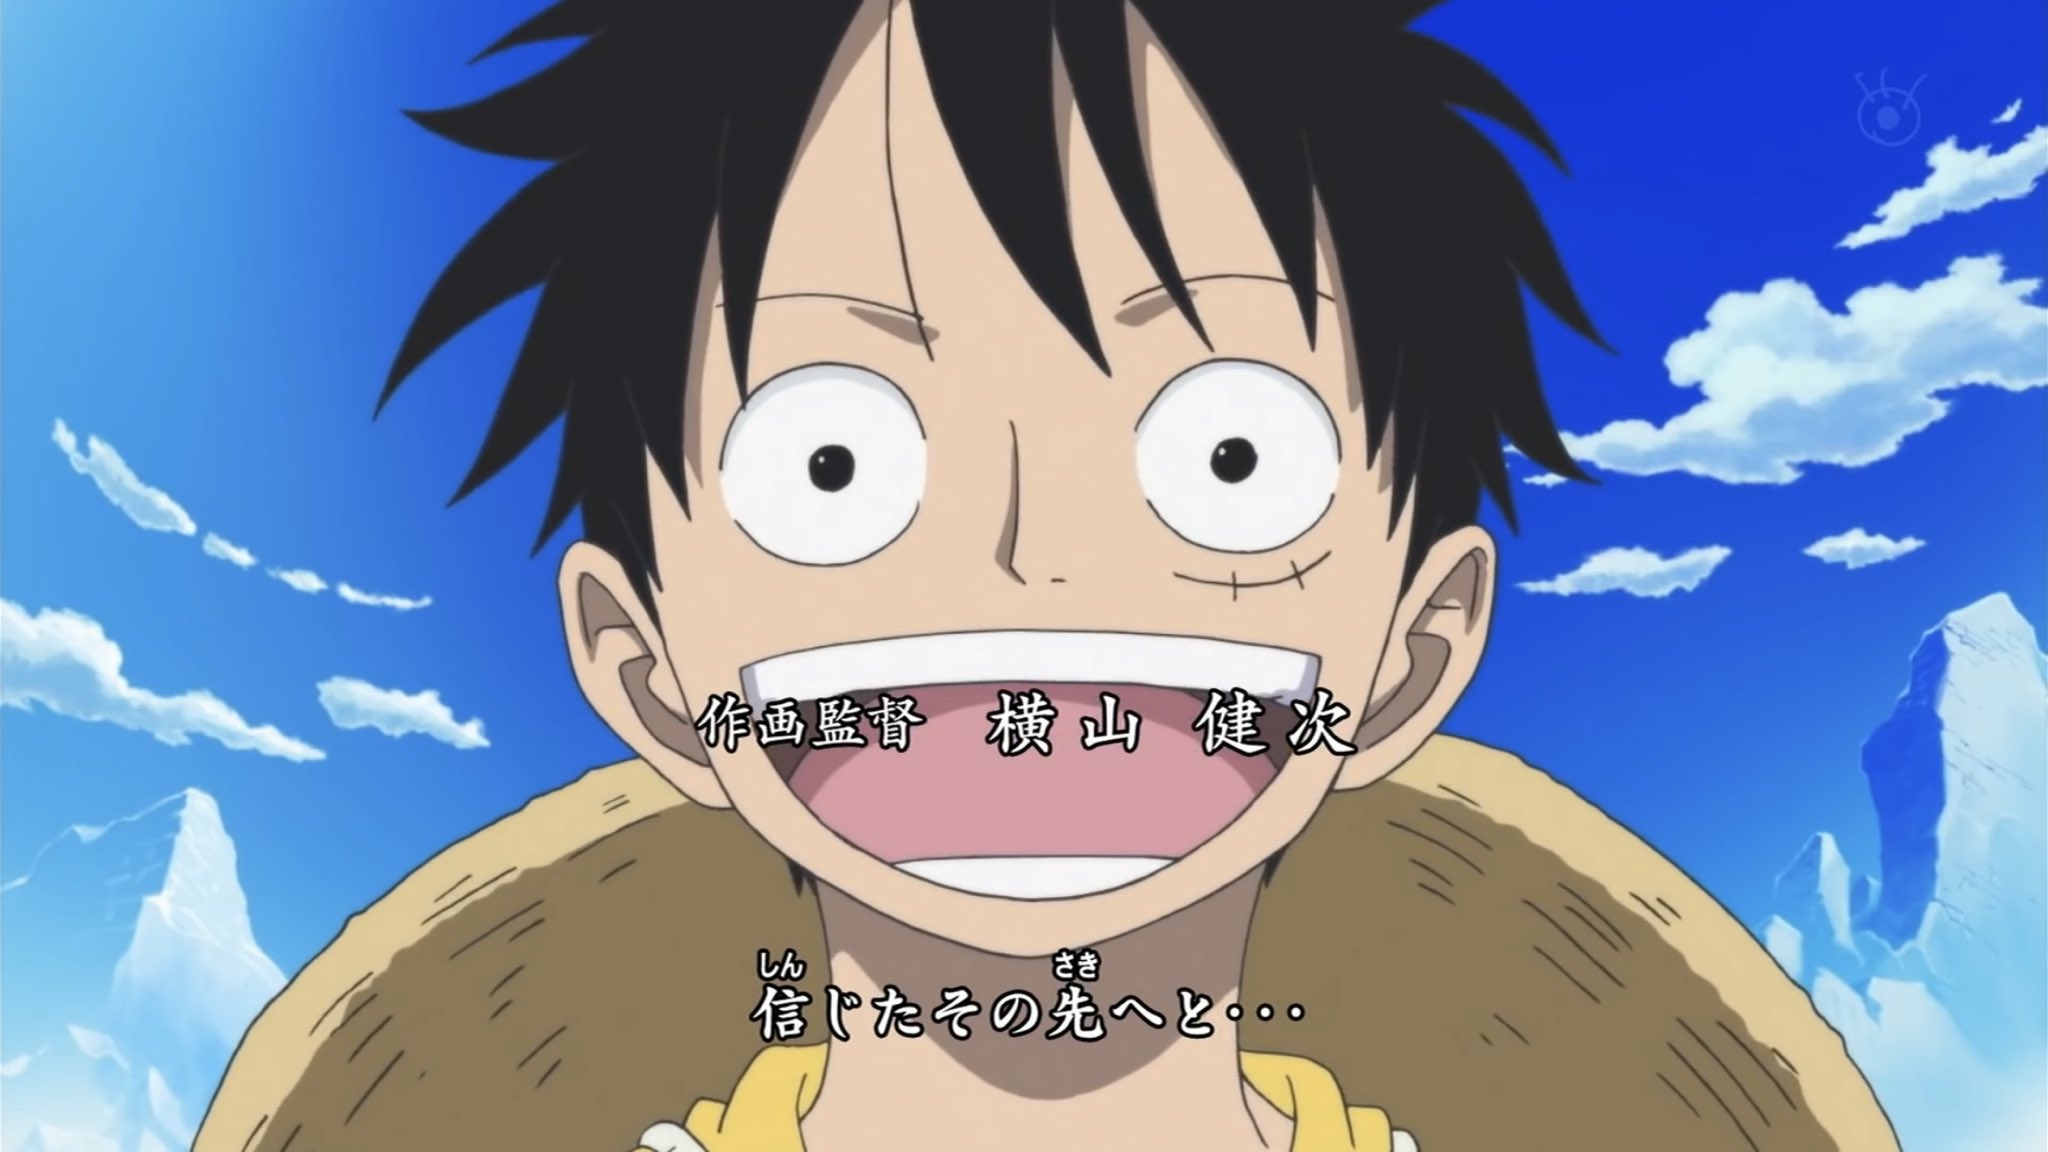 تويتر Isa على تويتر One Piece Opening 13 Onepiece Oneday Animeopening T Co 9rtdusw4hd